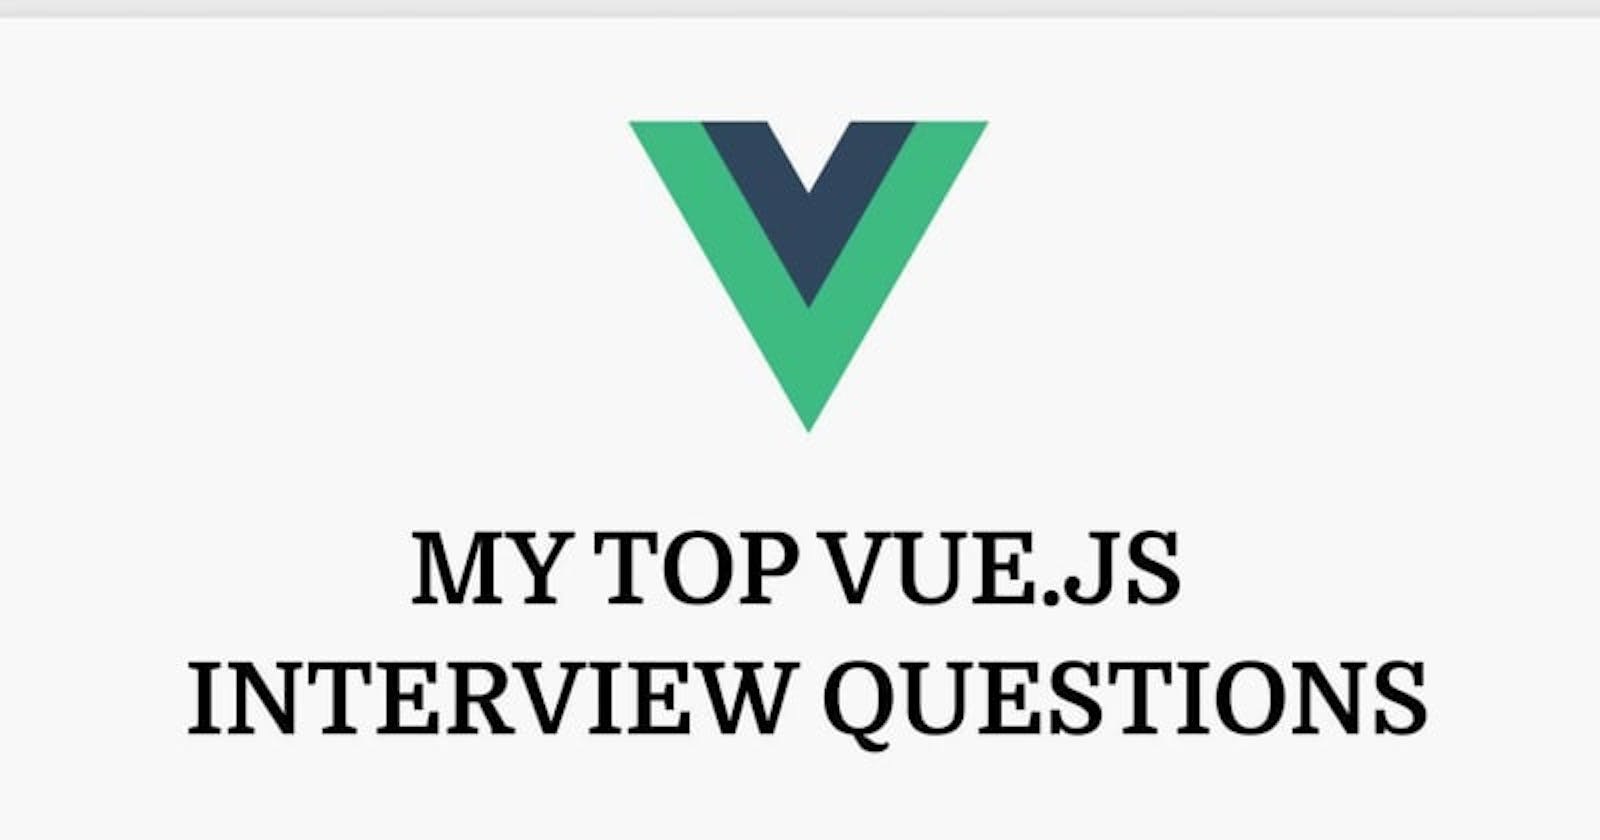 My Top Vue.js Interview Questions